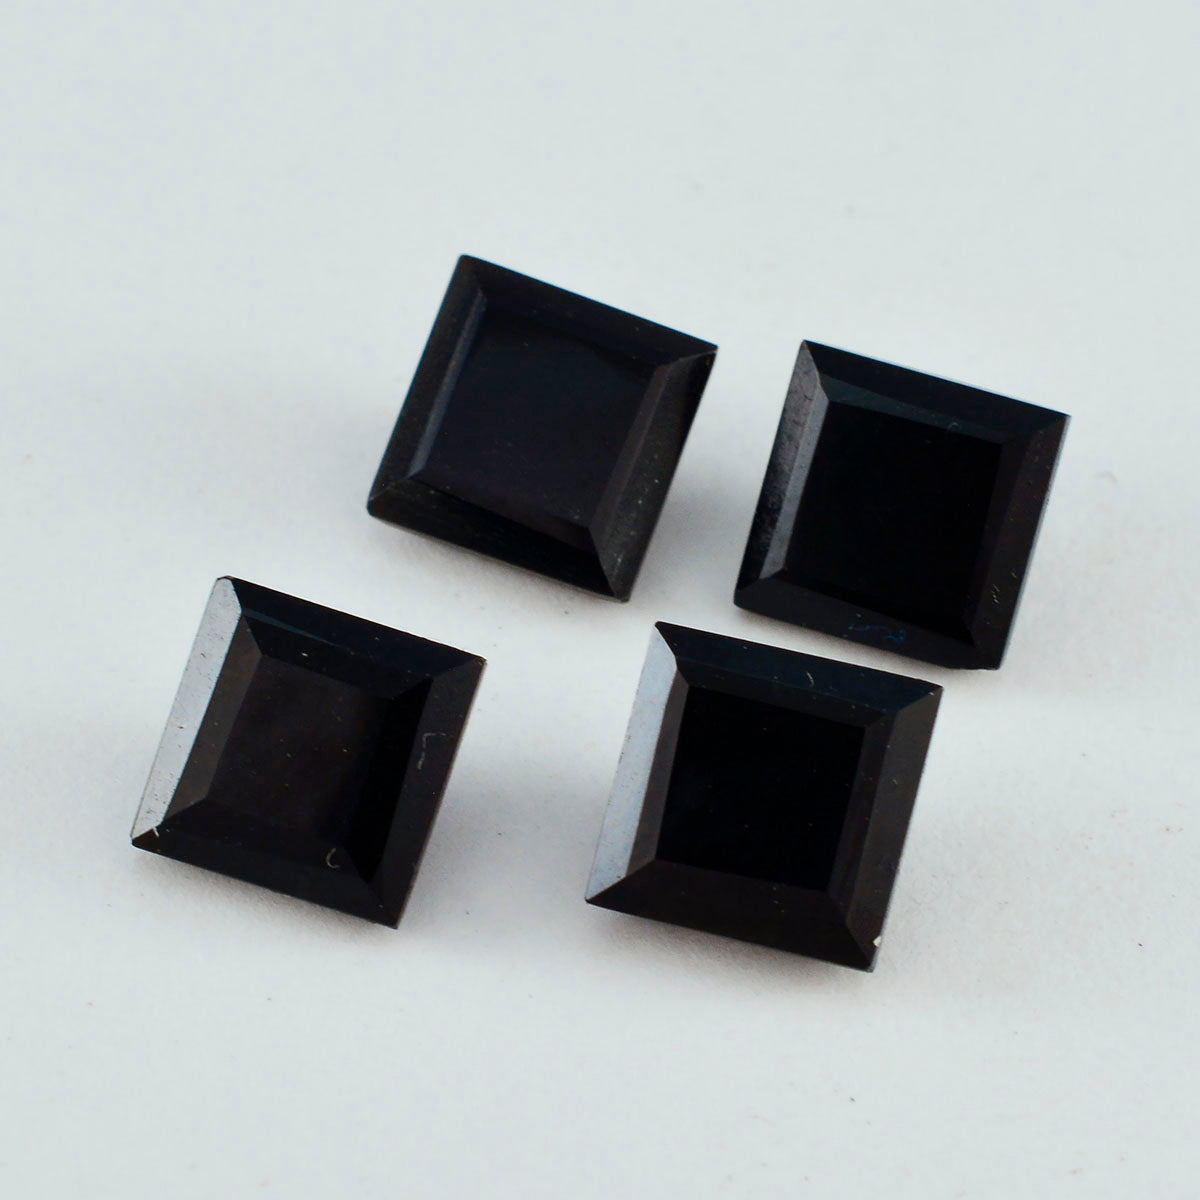 Riyogems 1PC Natural Black Onyx Faceted 13x13 mm Square Shape A Quality Loose Gem